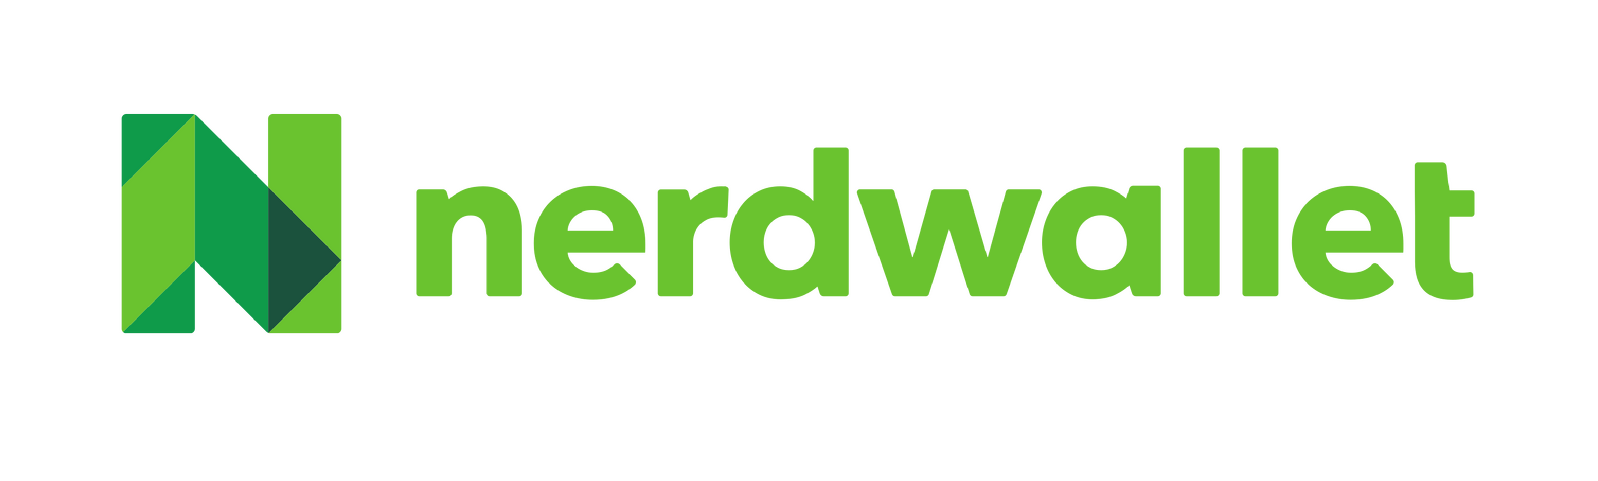  2022/02/nerdwallet-logo-updated-01.png 